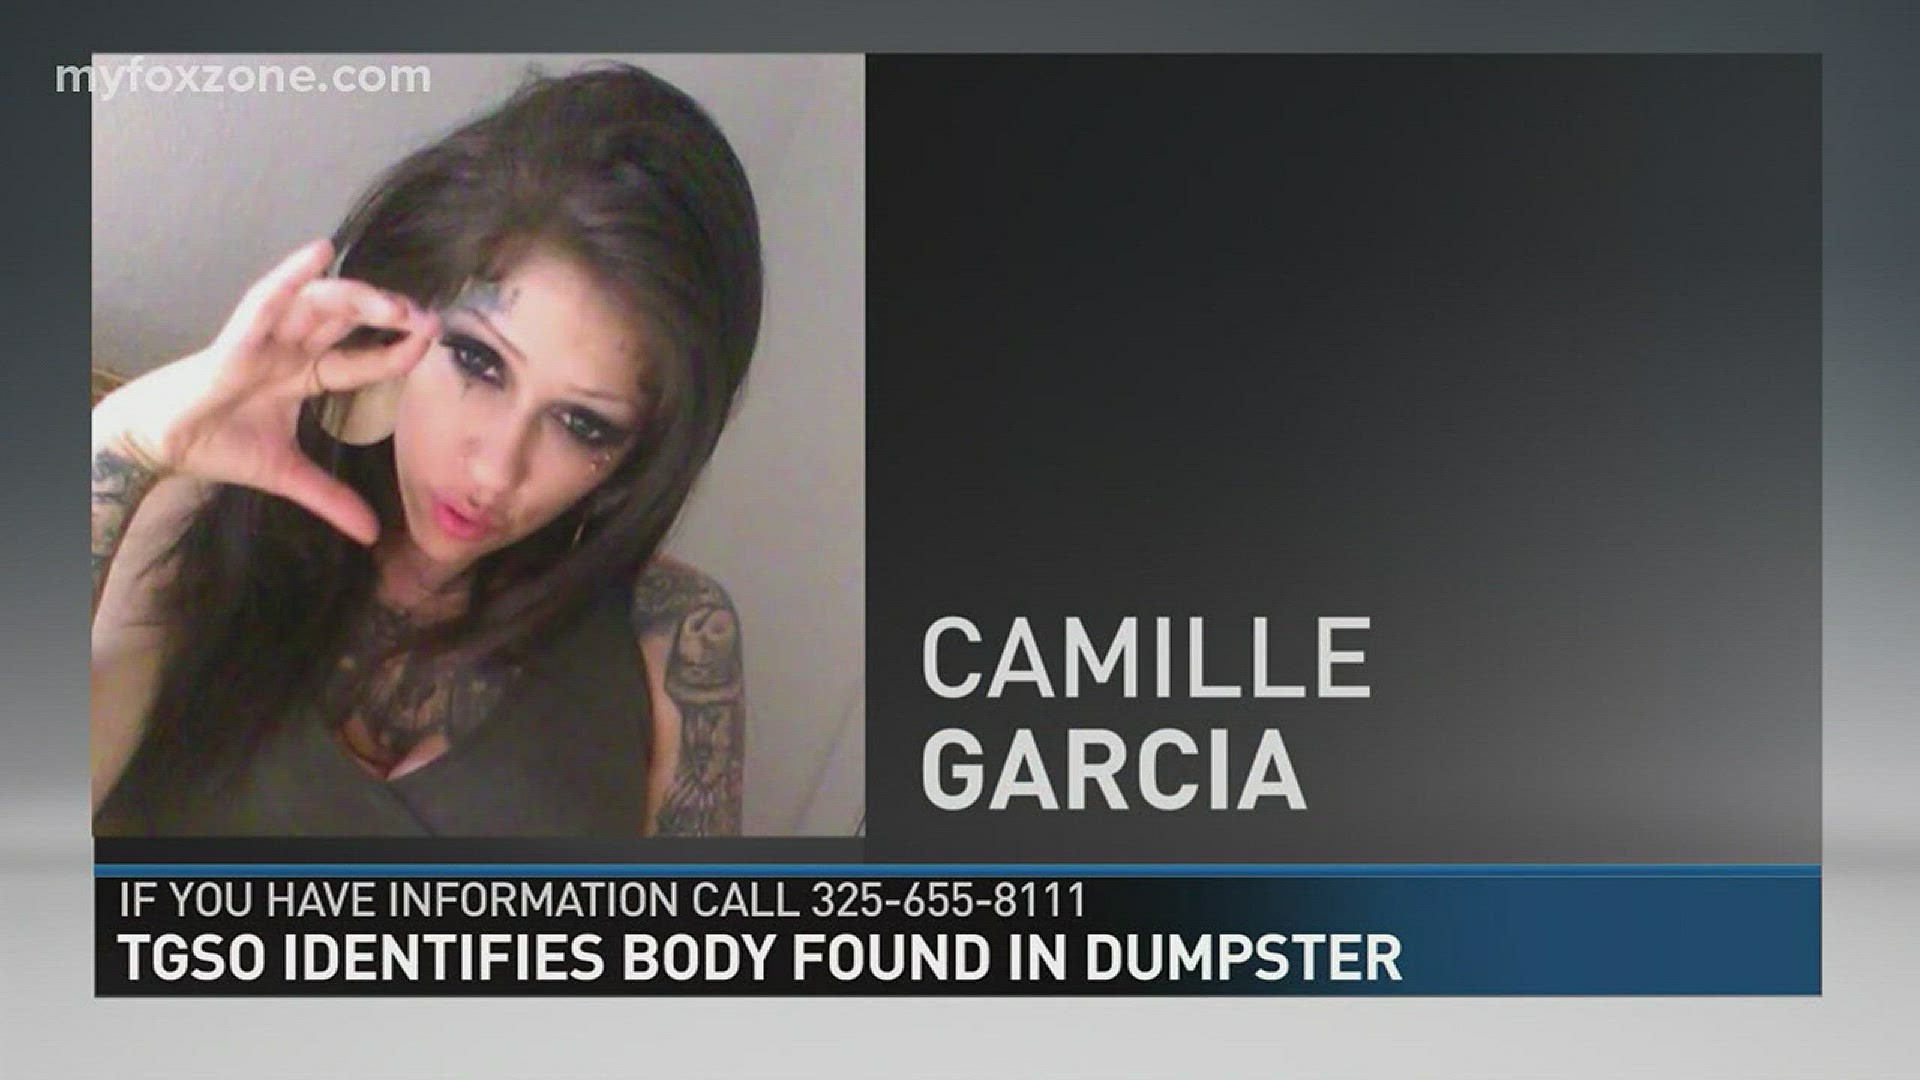 Body found in dumpster is identified.